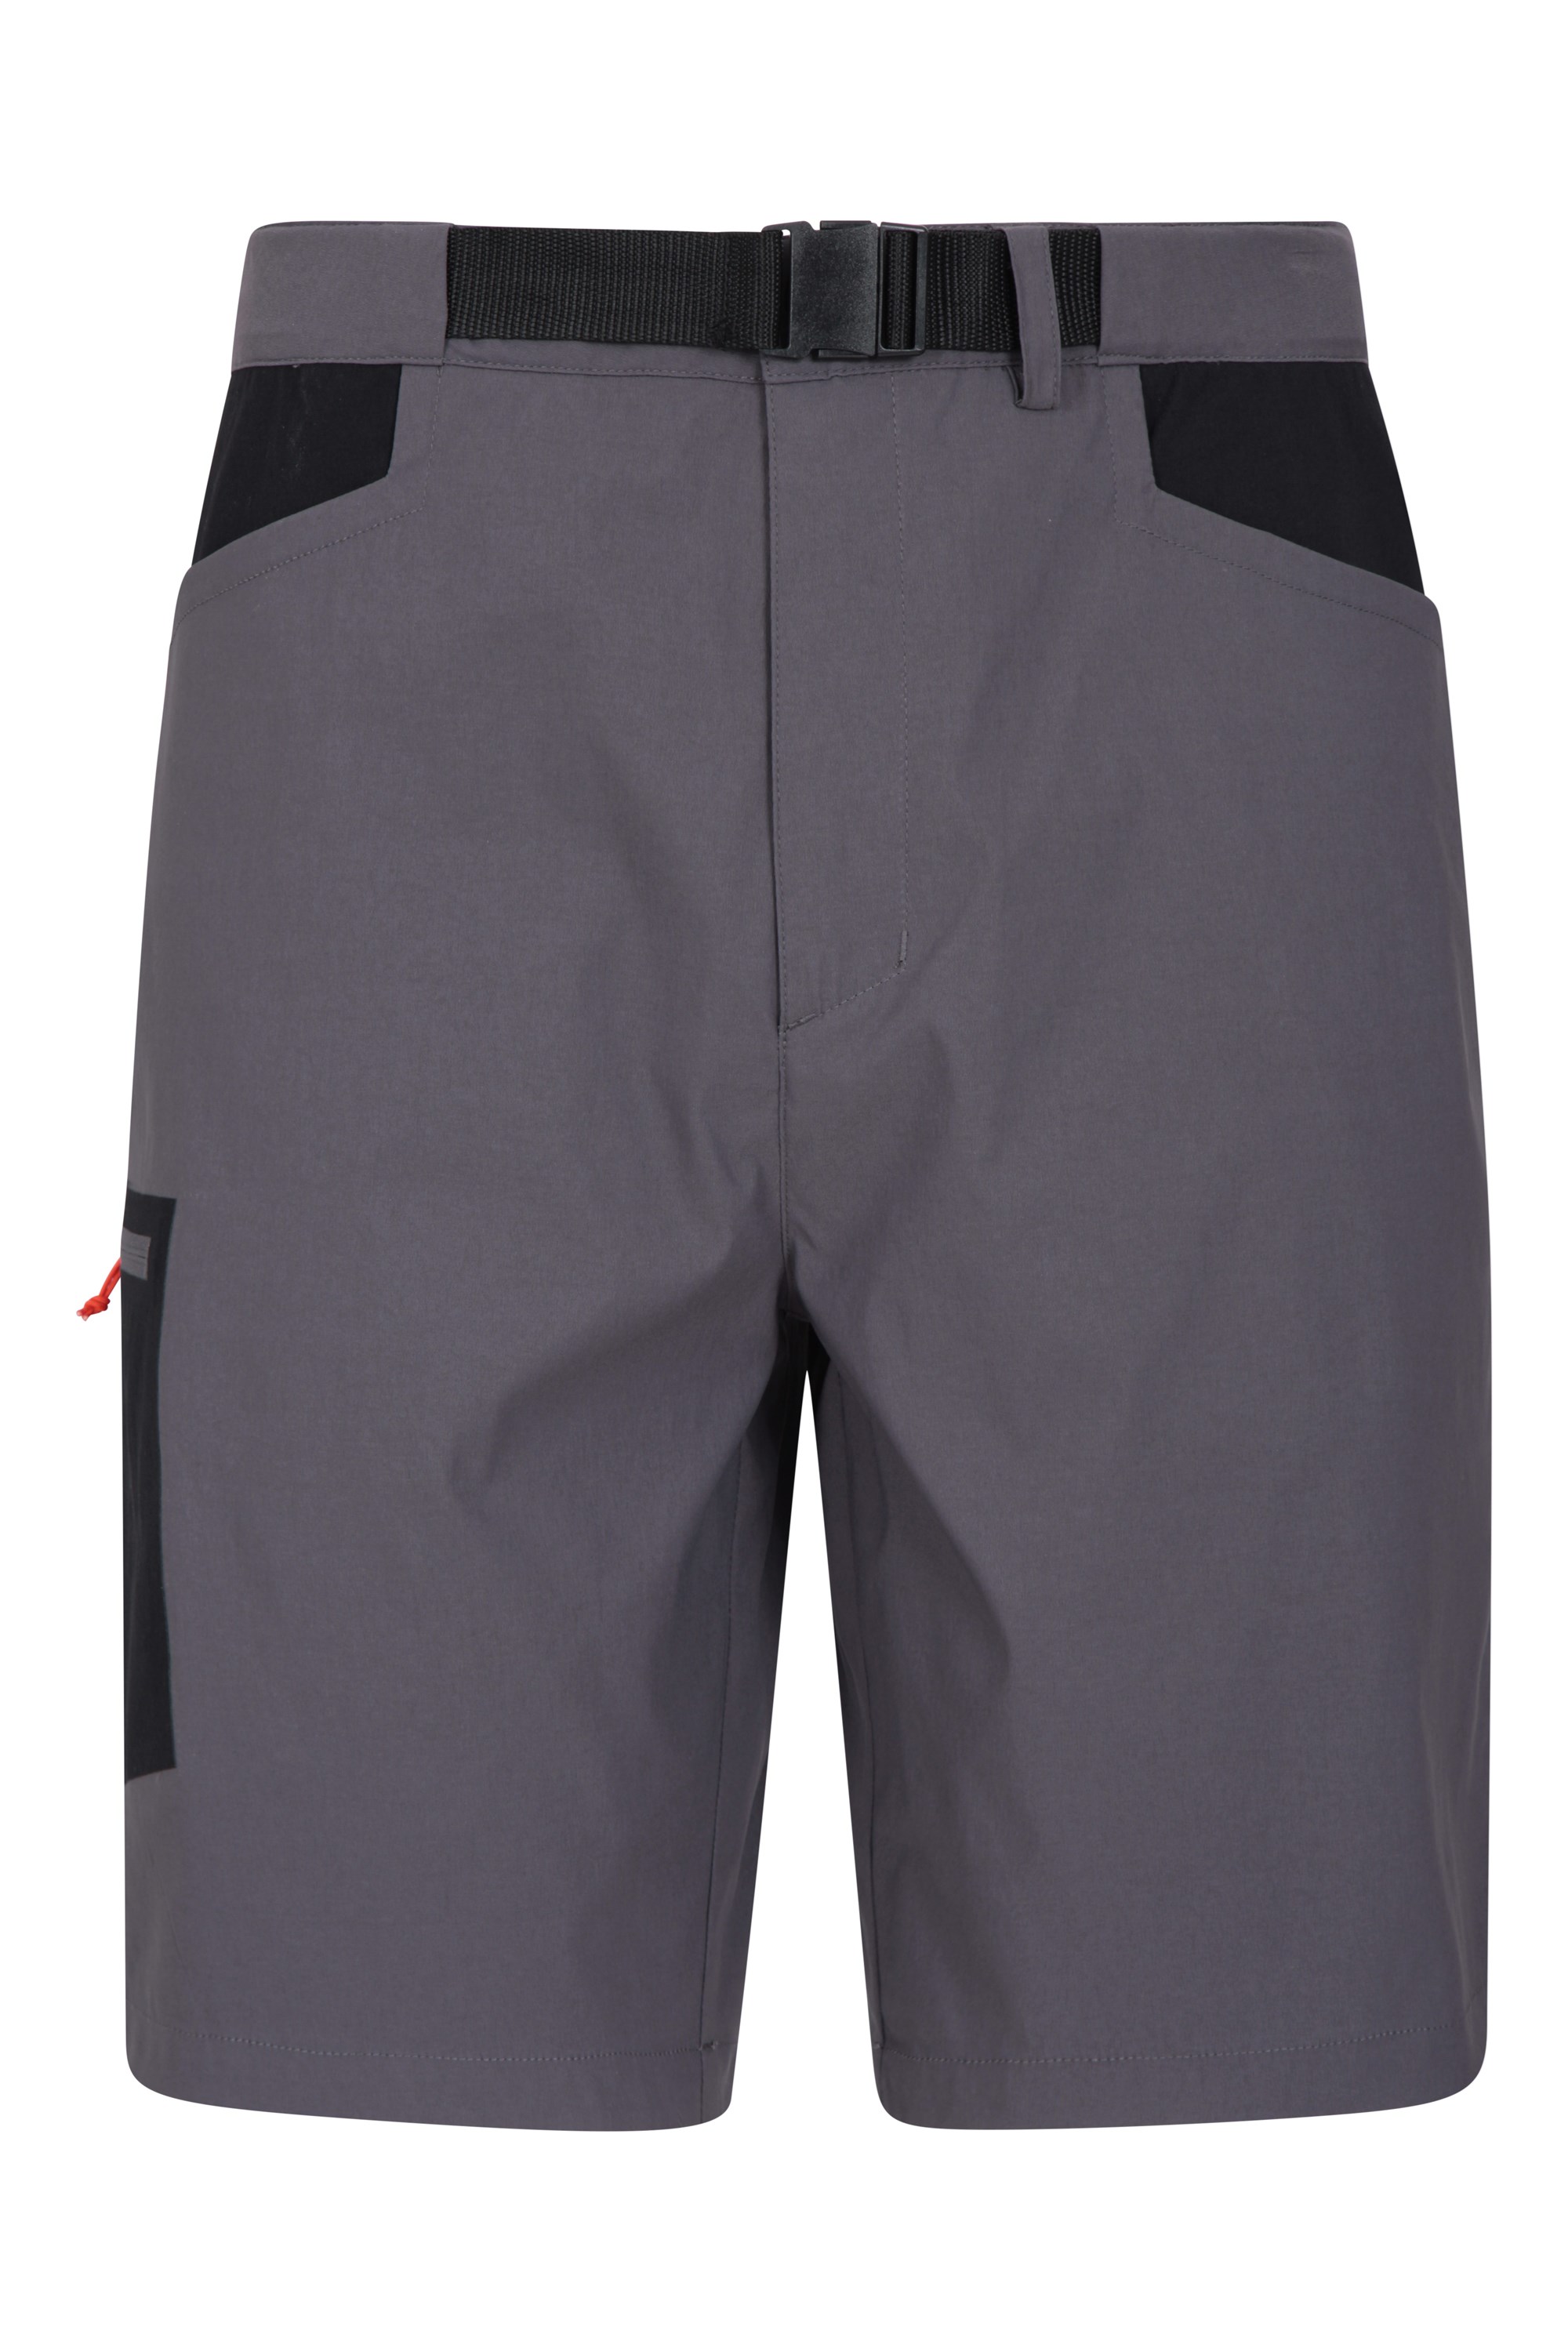 Savanna Mens Trekking Shorts - Grey